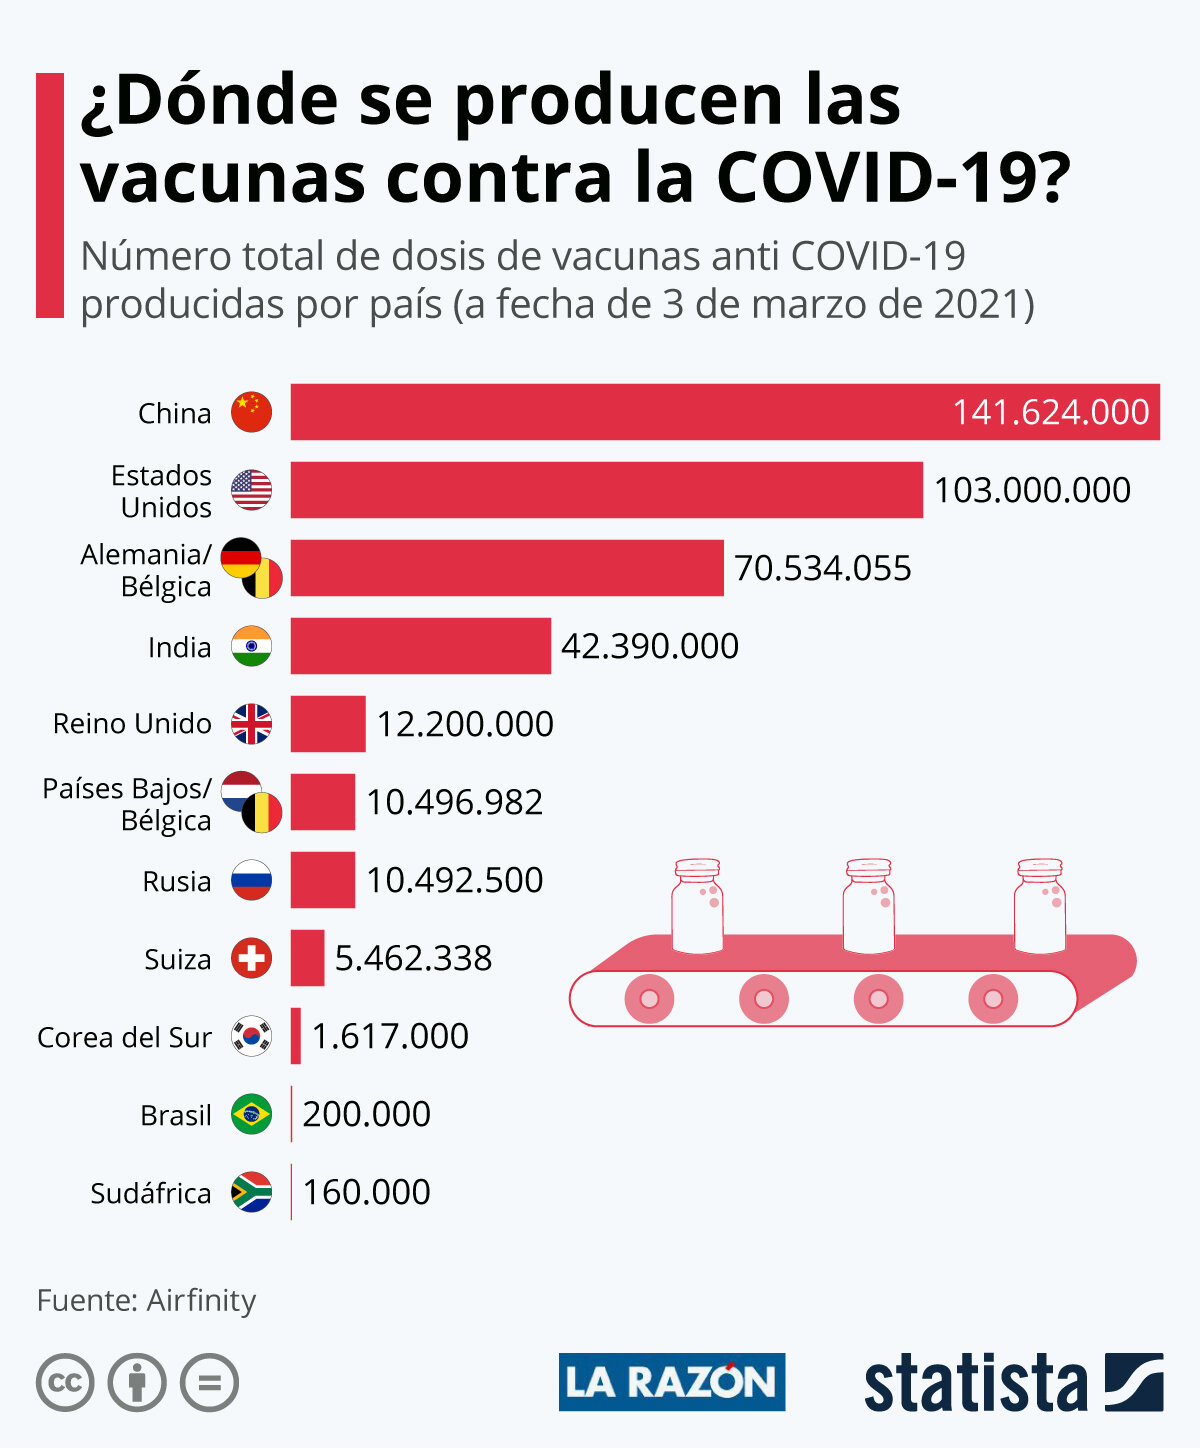 20210324_Vaccine_Production_Countries_ESP_LaRazon.jpg